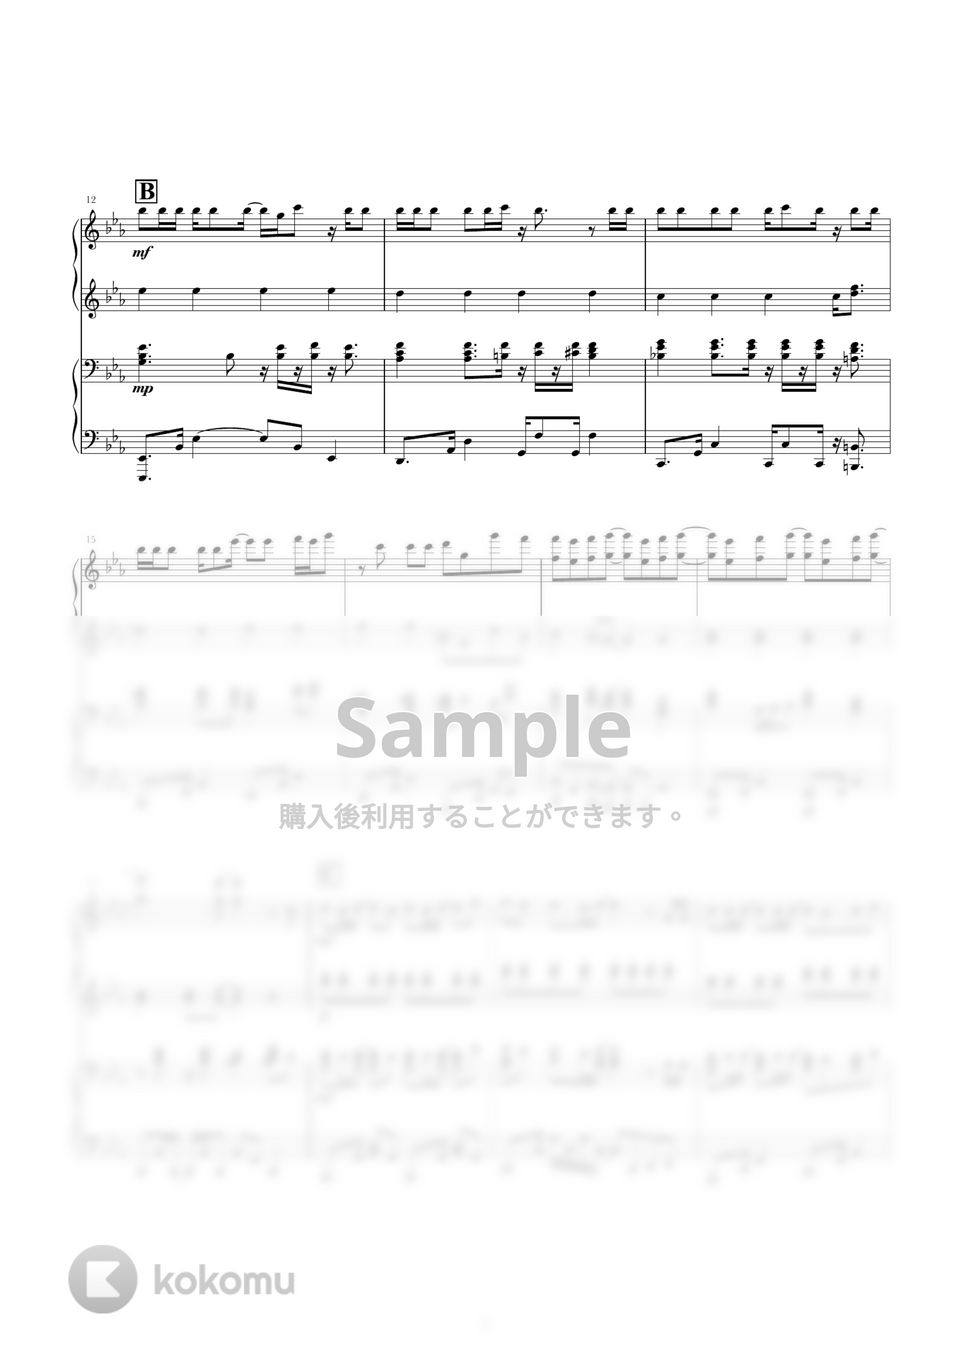 Official髭男dism - 115万キロのフィルム (ピアノ連弾) by norimaki